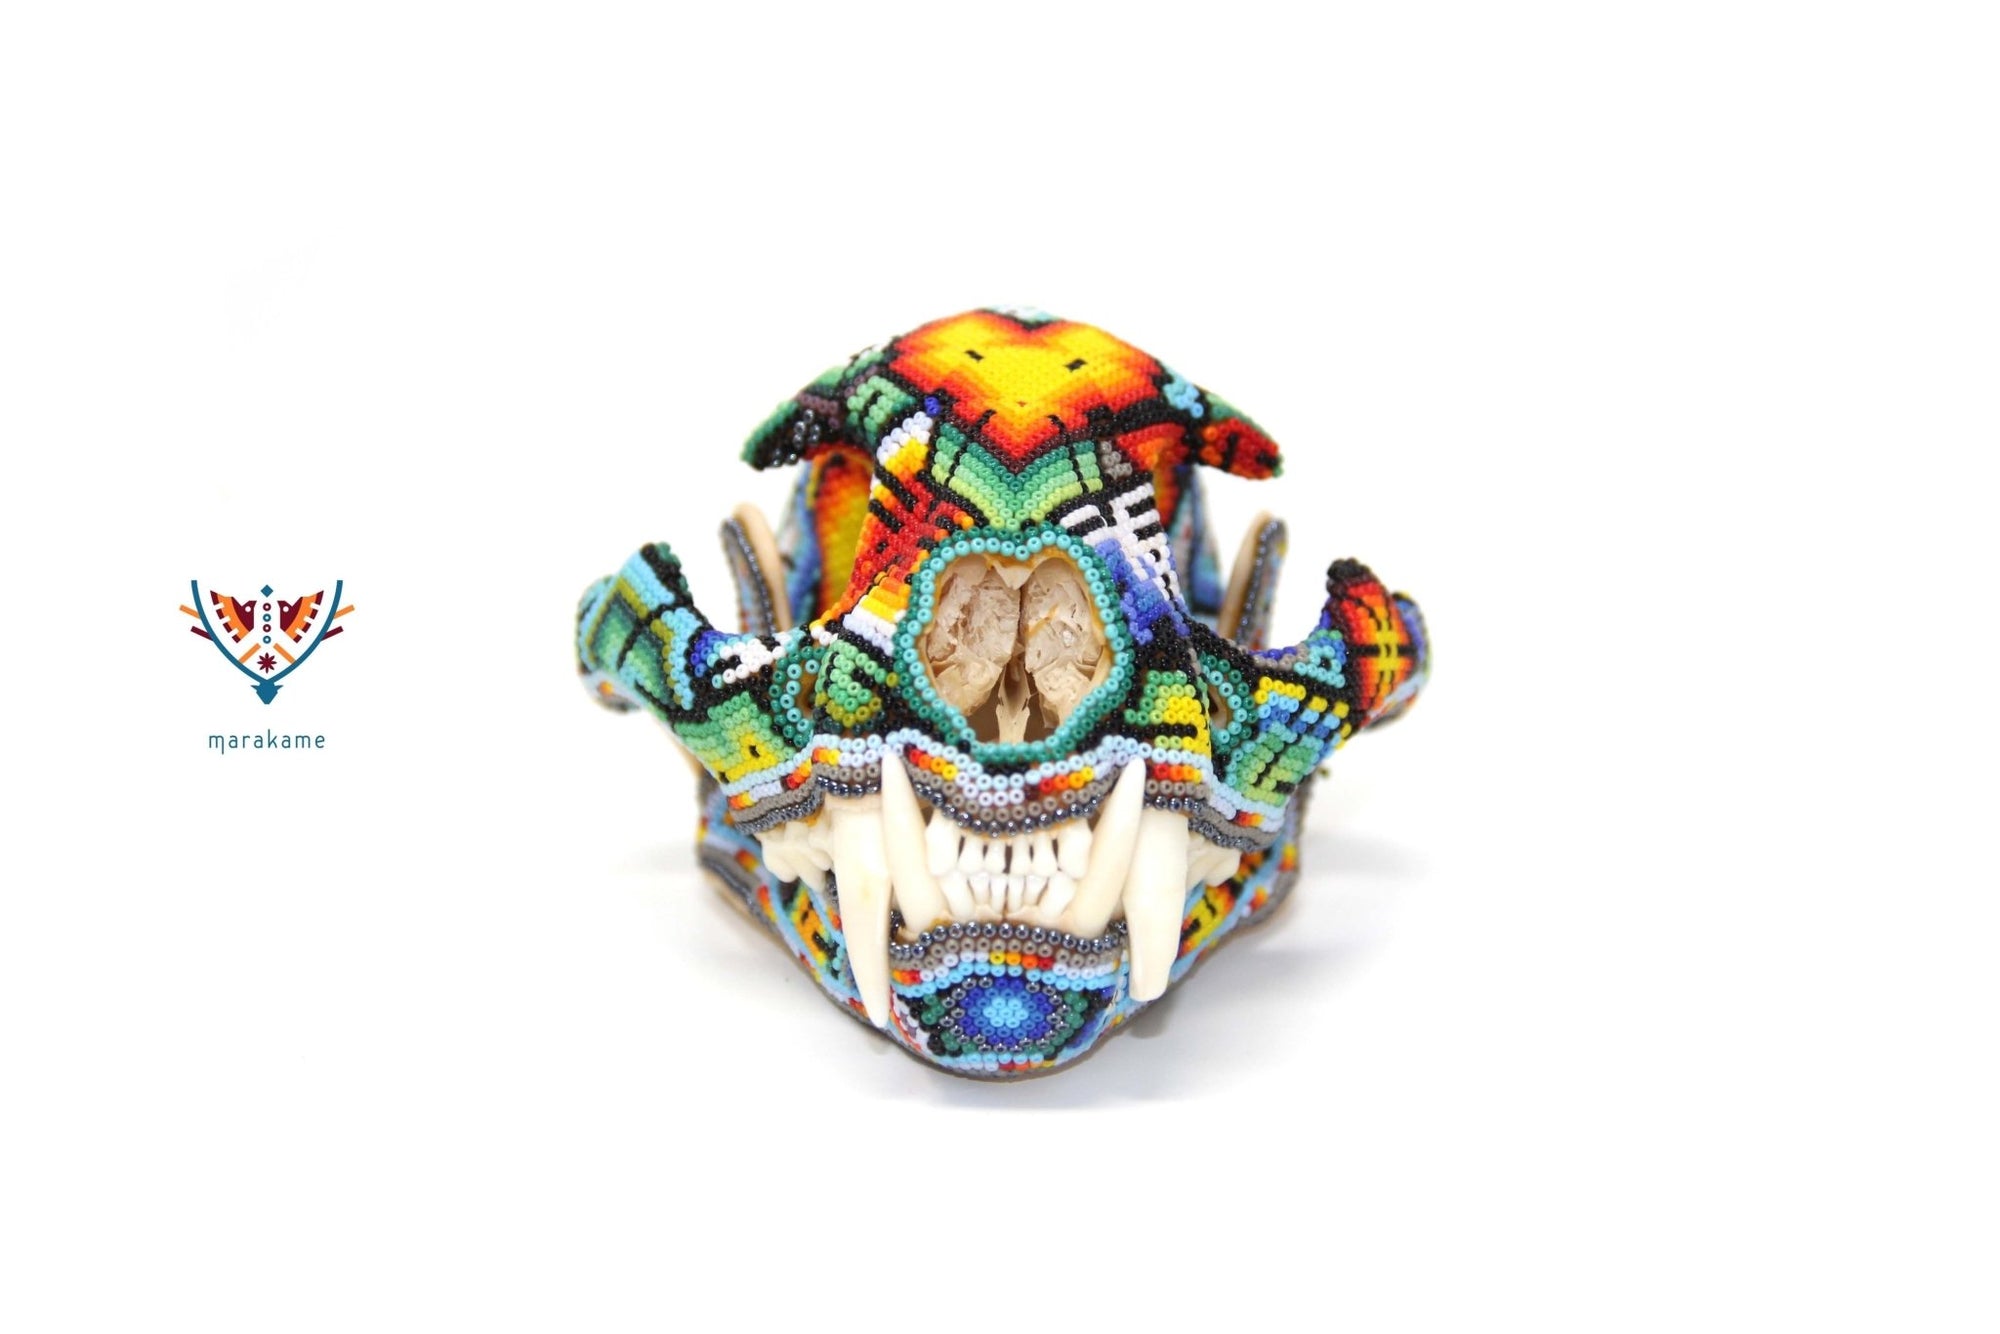 Cráneo de felino Huichol -"Ewi Xawe II" - Arte Huichol - Marakame